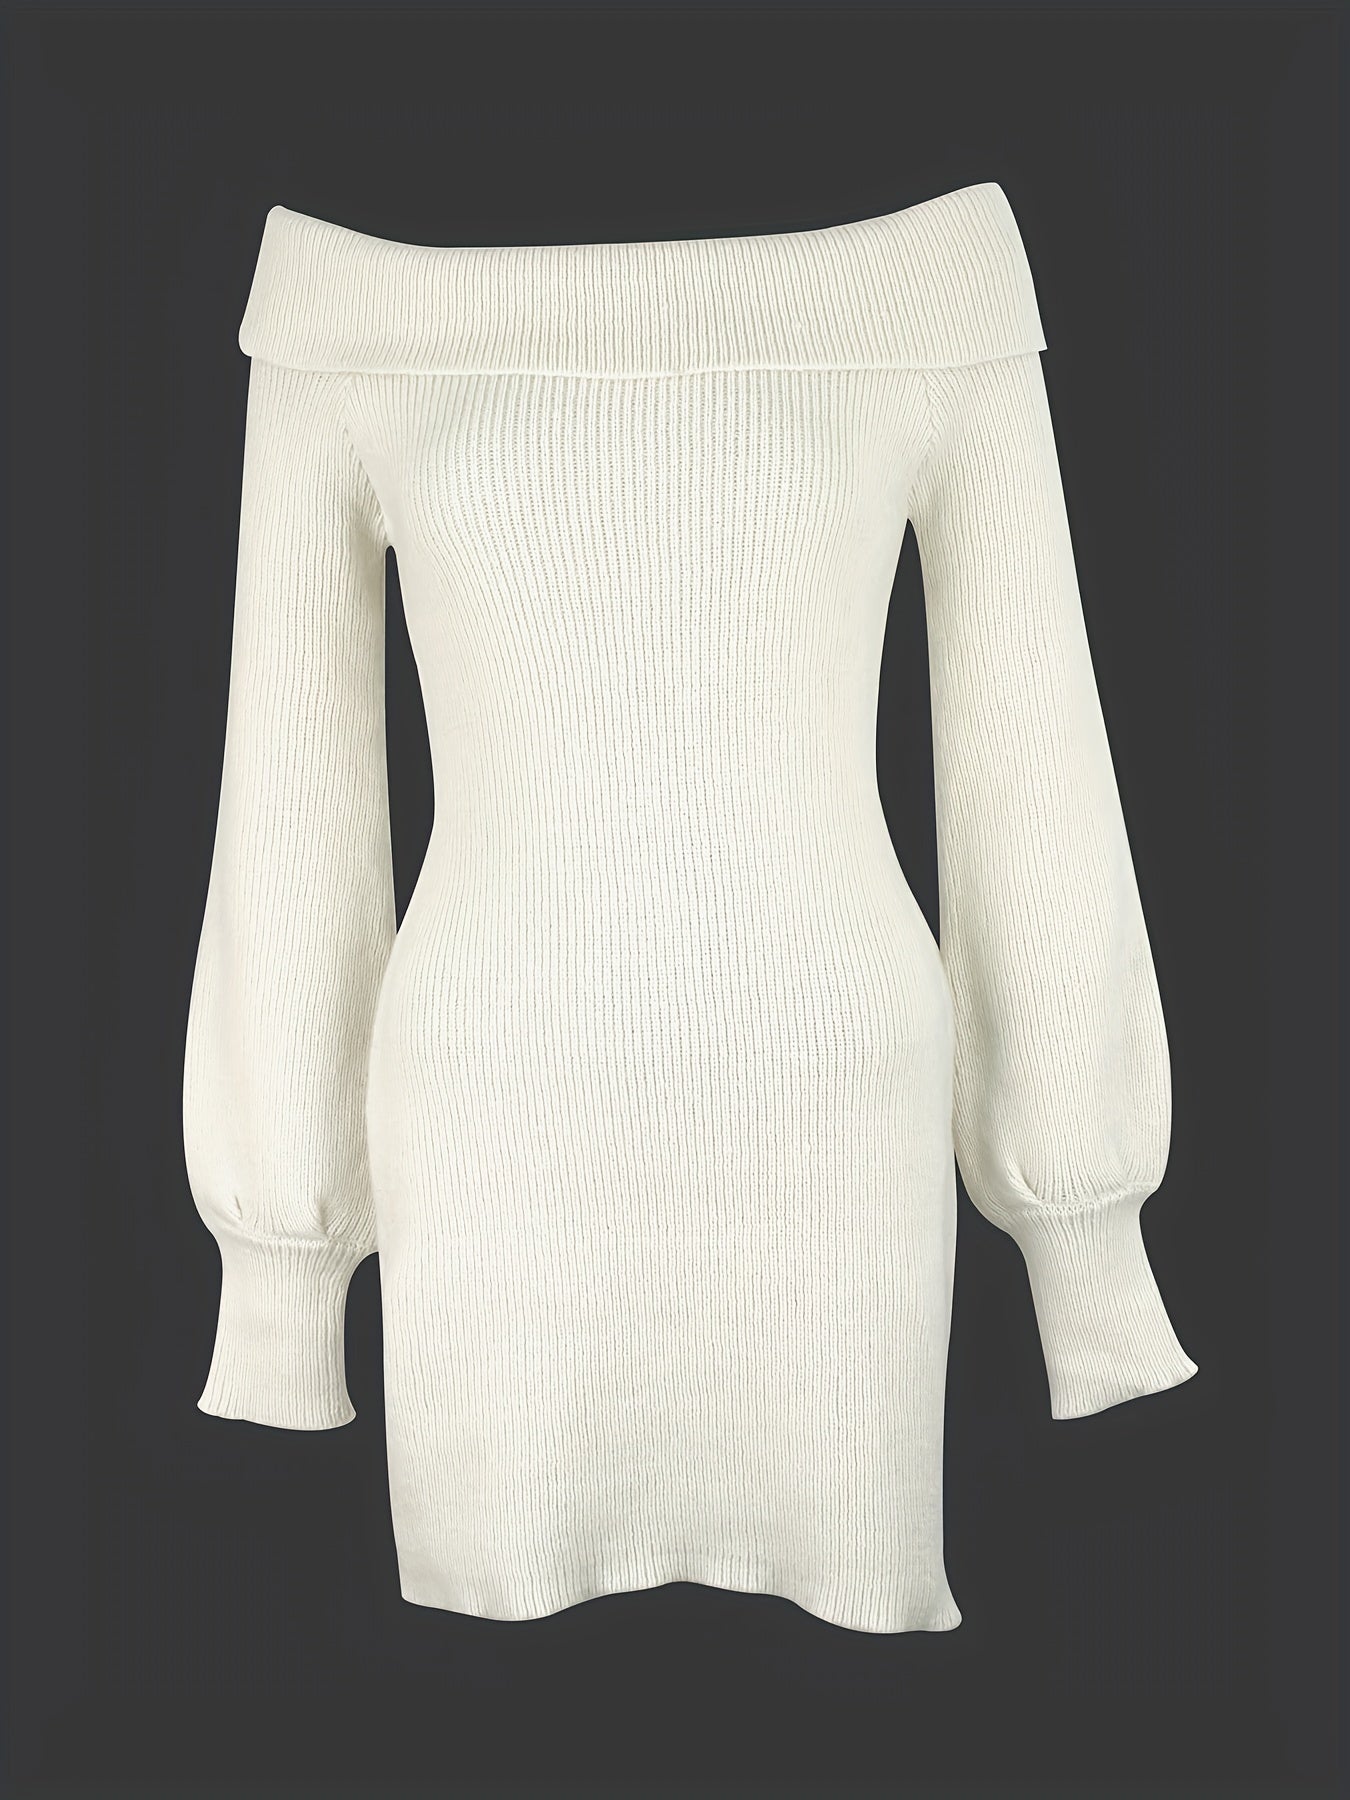 VzyzvSolid Off-shoulder Knit Dress, Elegant Long Sleeve Dress For Fall & Winter, Women's Clothing